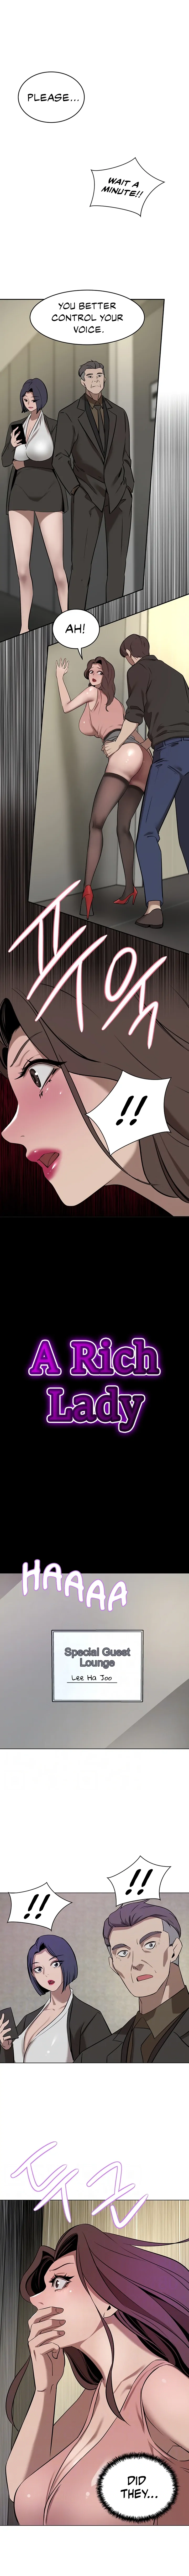 A Rich Lady - Page 2